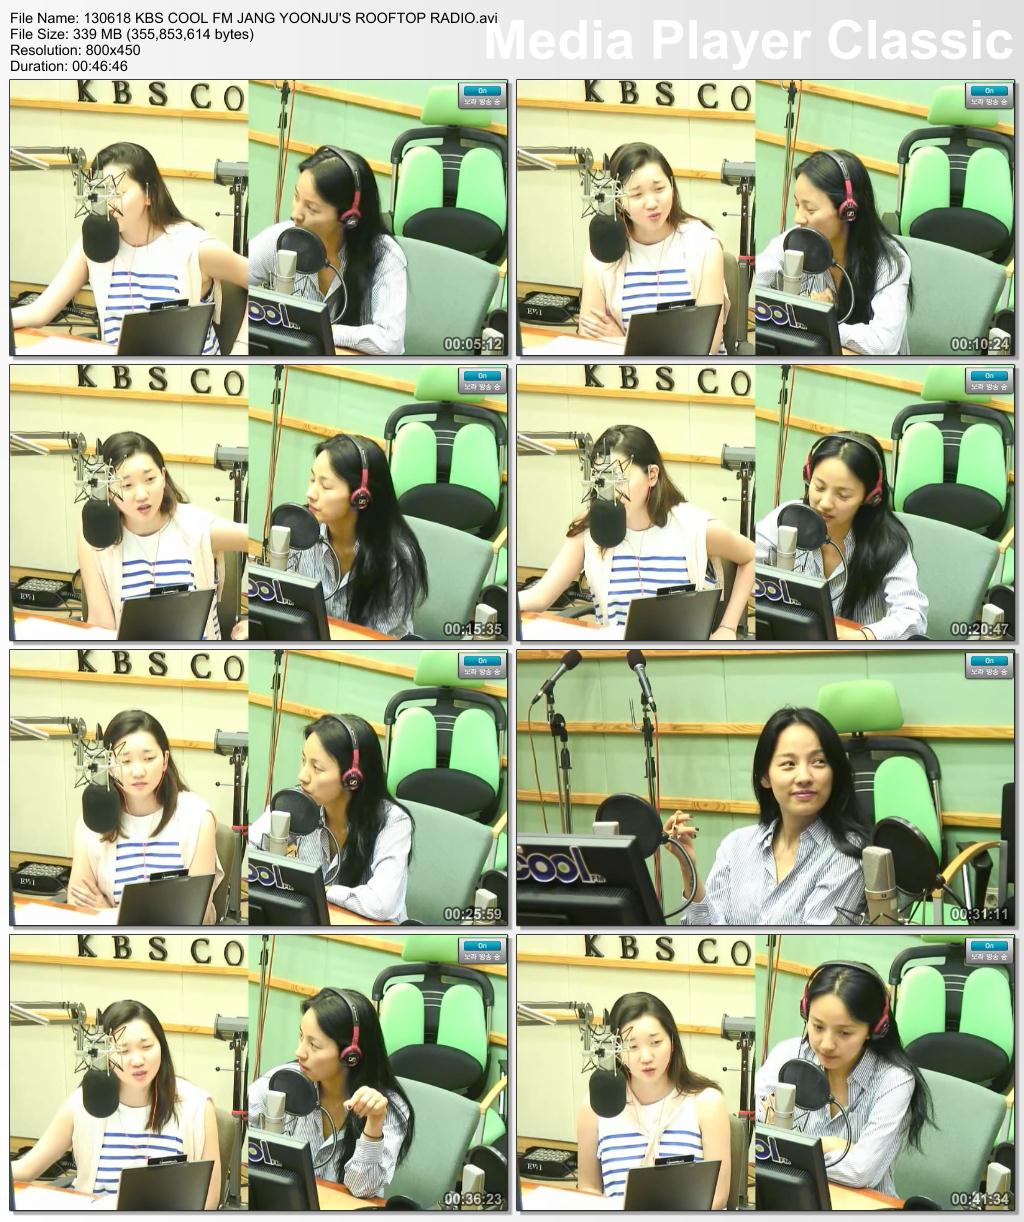 [DL][18.06.13] KBS COOL FM Jang Yoon Ju's Rooftop Radio 13061810